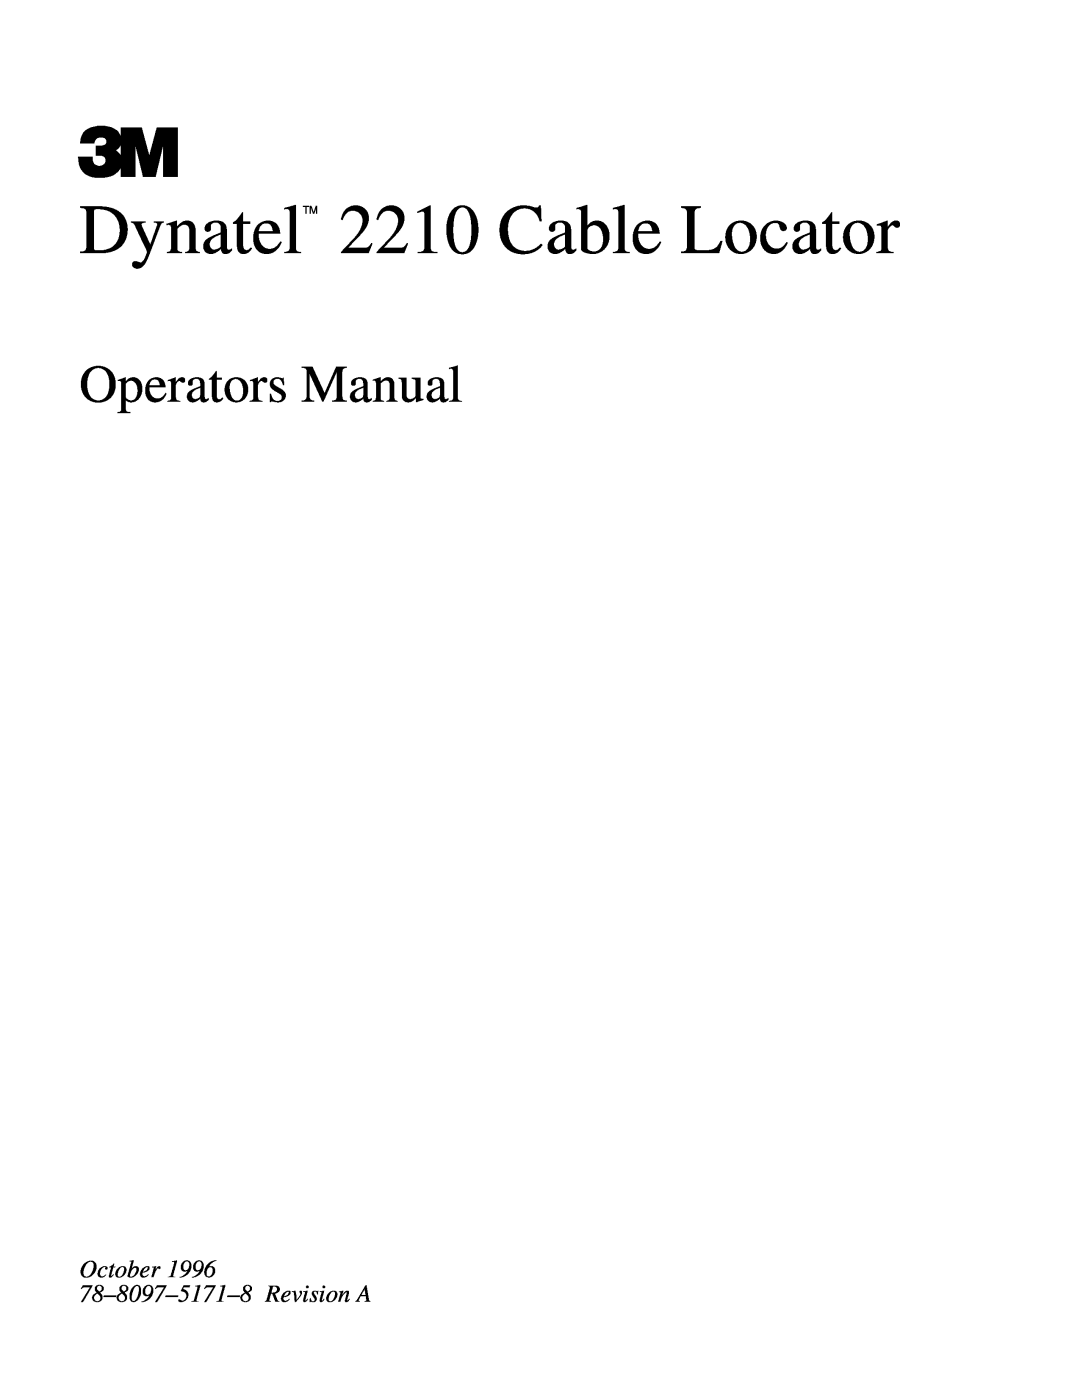 3M manual DynatelTM 2210 Cable Locator, Operators Manual, October 1996 78±8097±5171±8 Revision A 